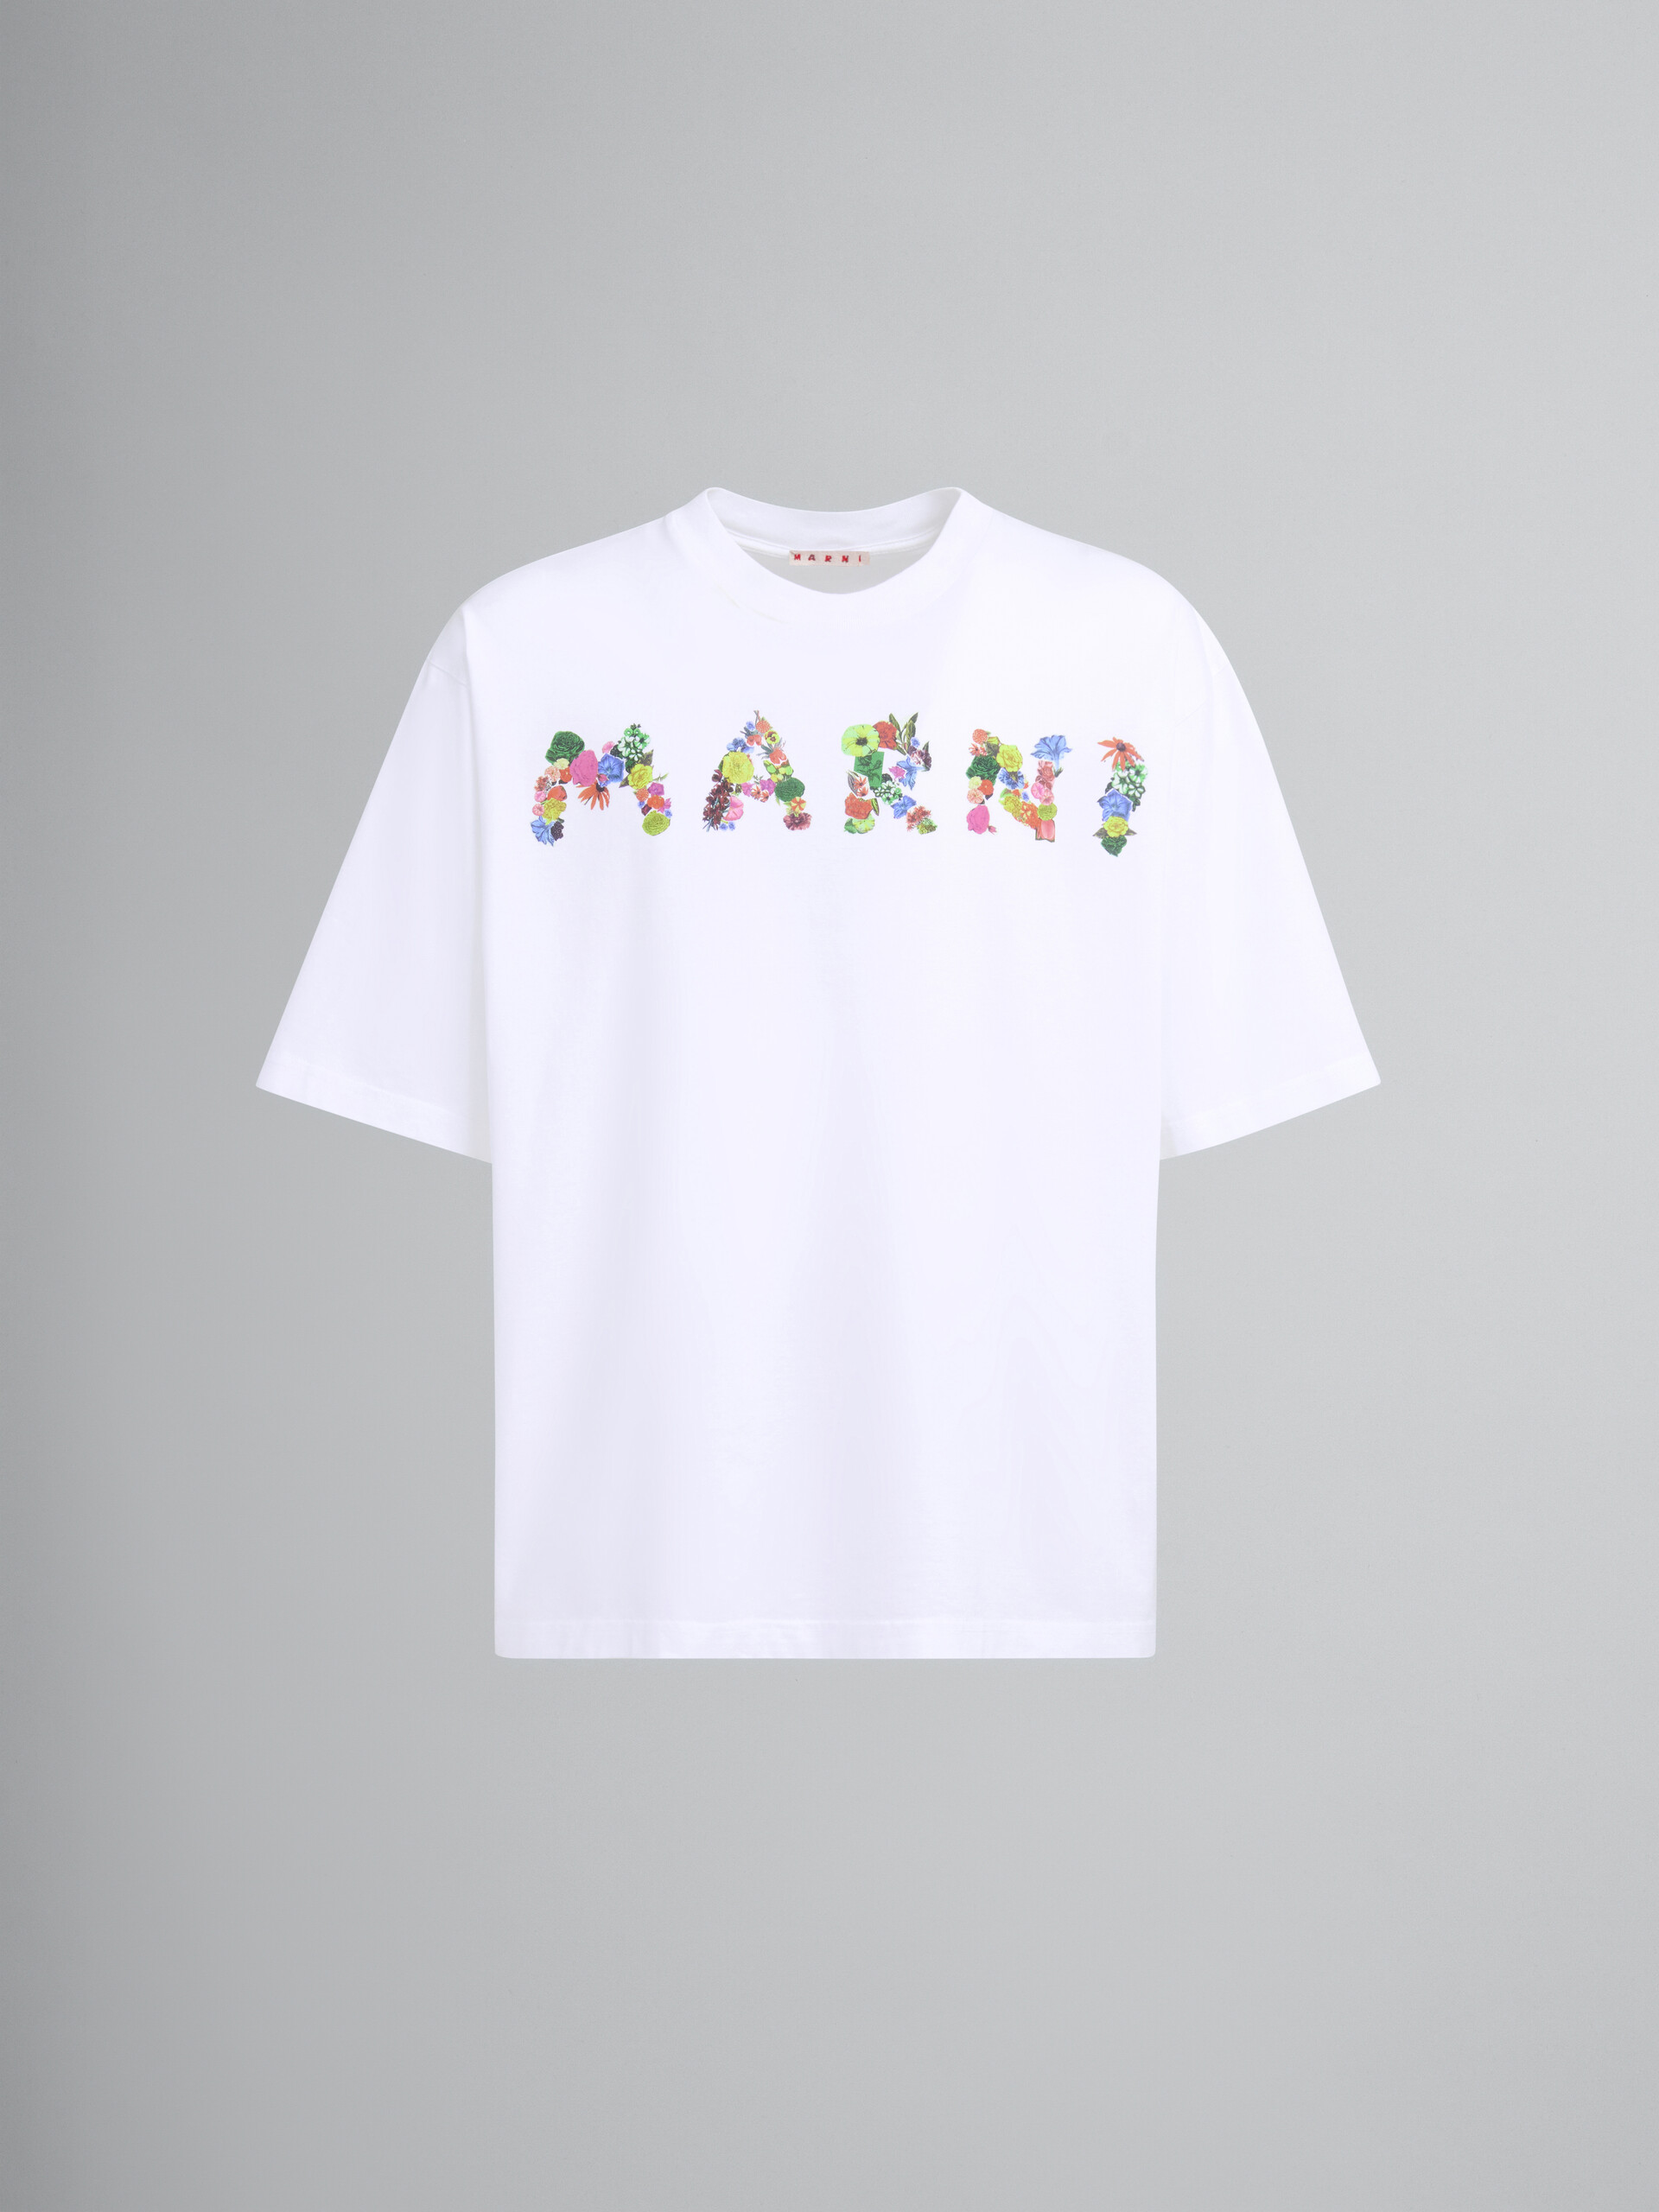 White cotton T-shirt with bouquet Marni logo - T-shirts - Image 1